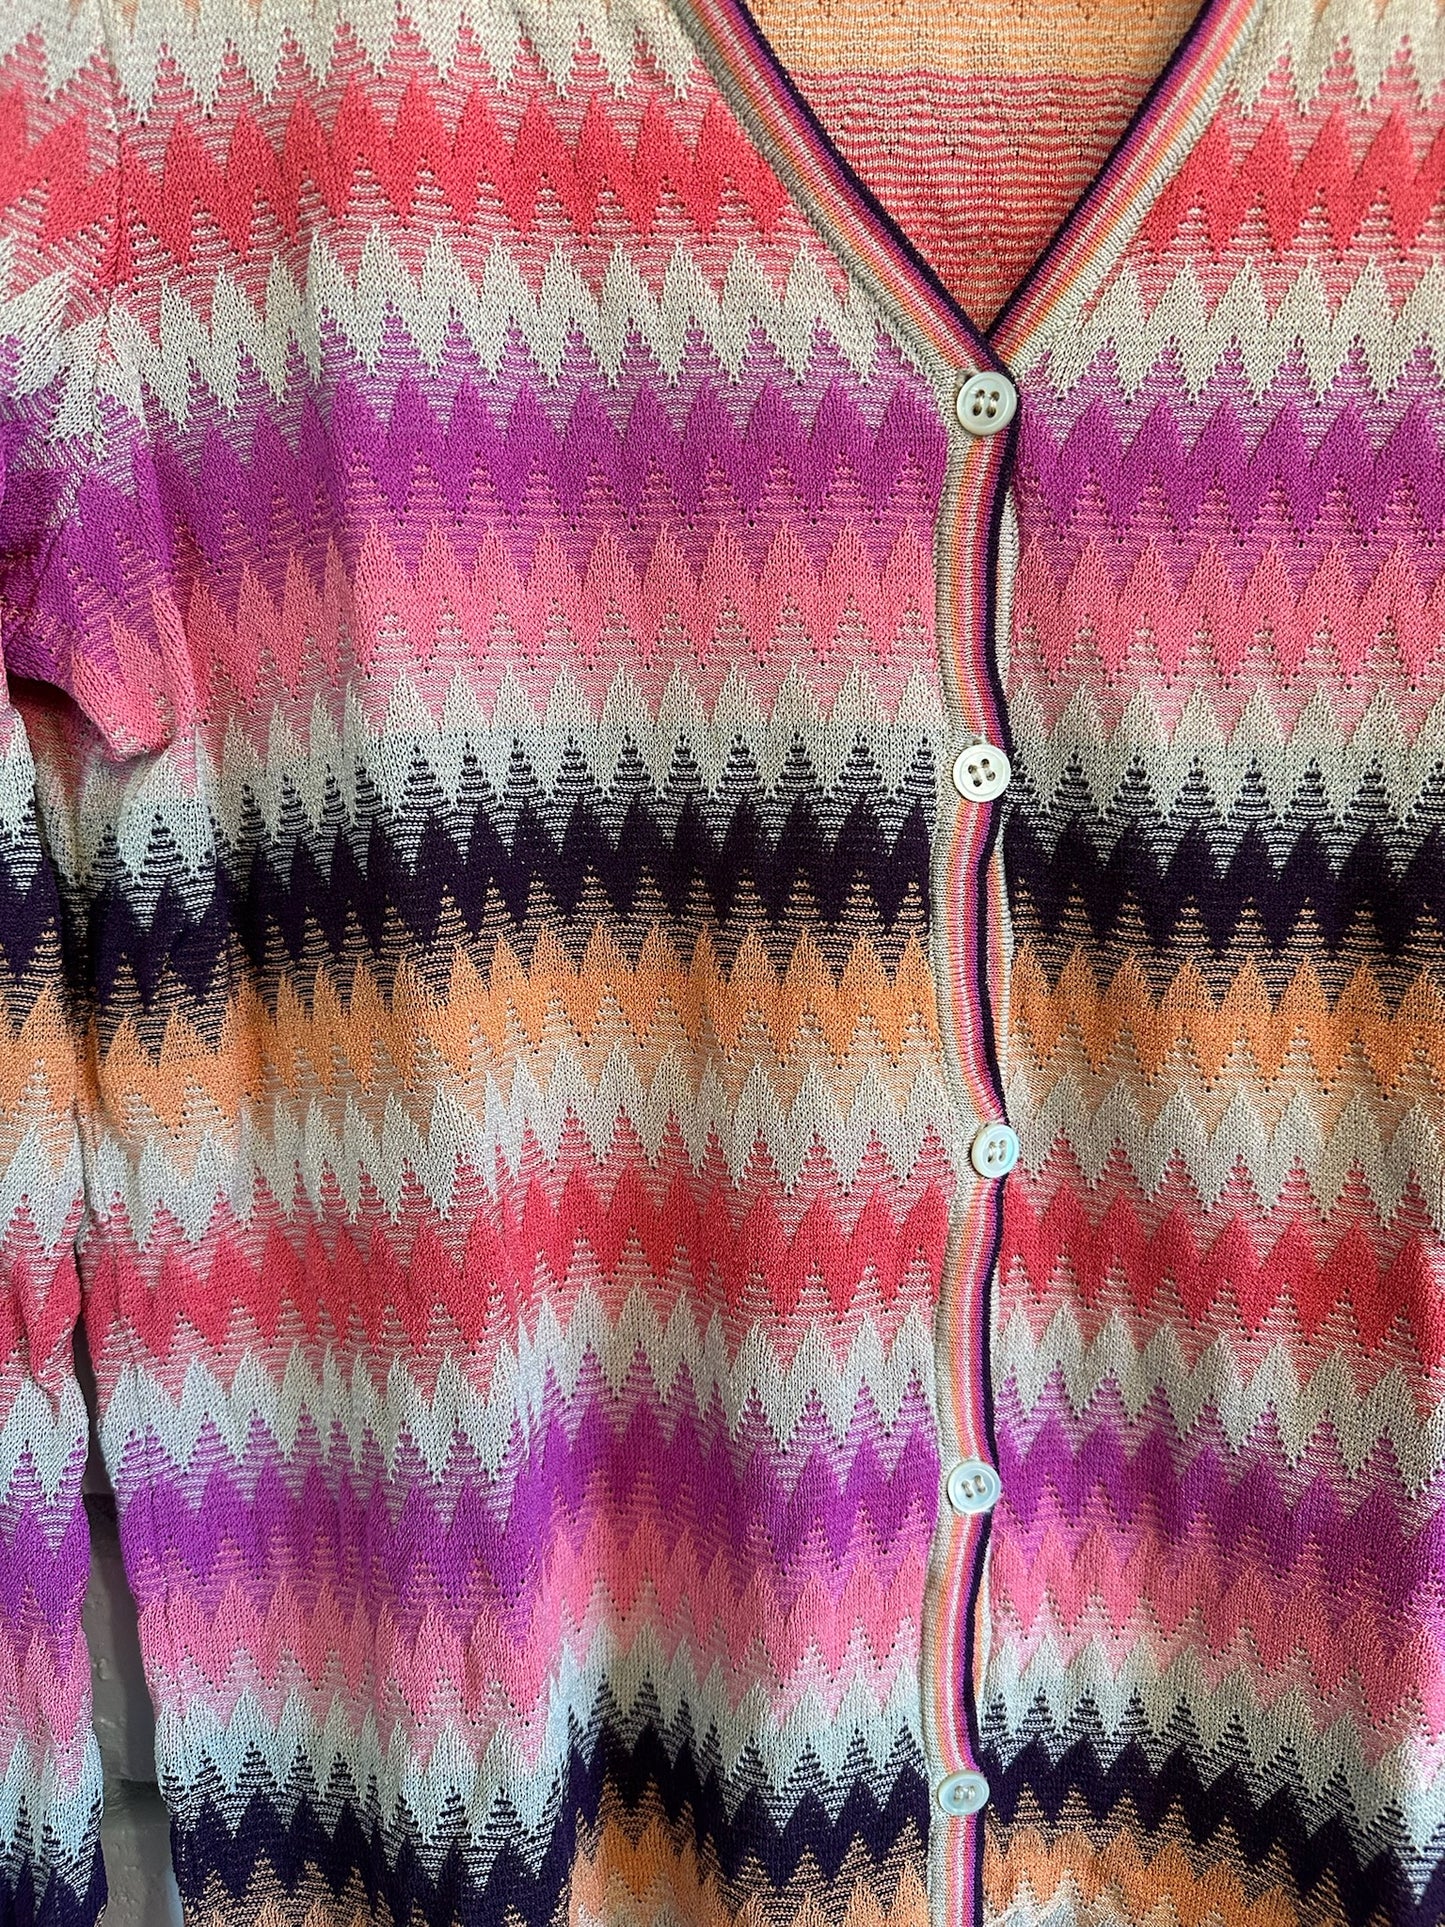 The Dawn Striped Sweater